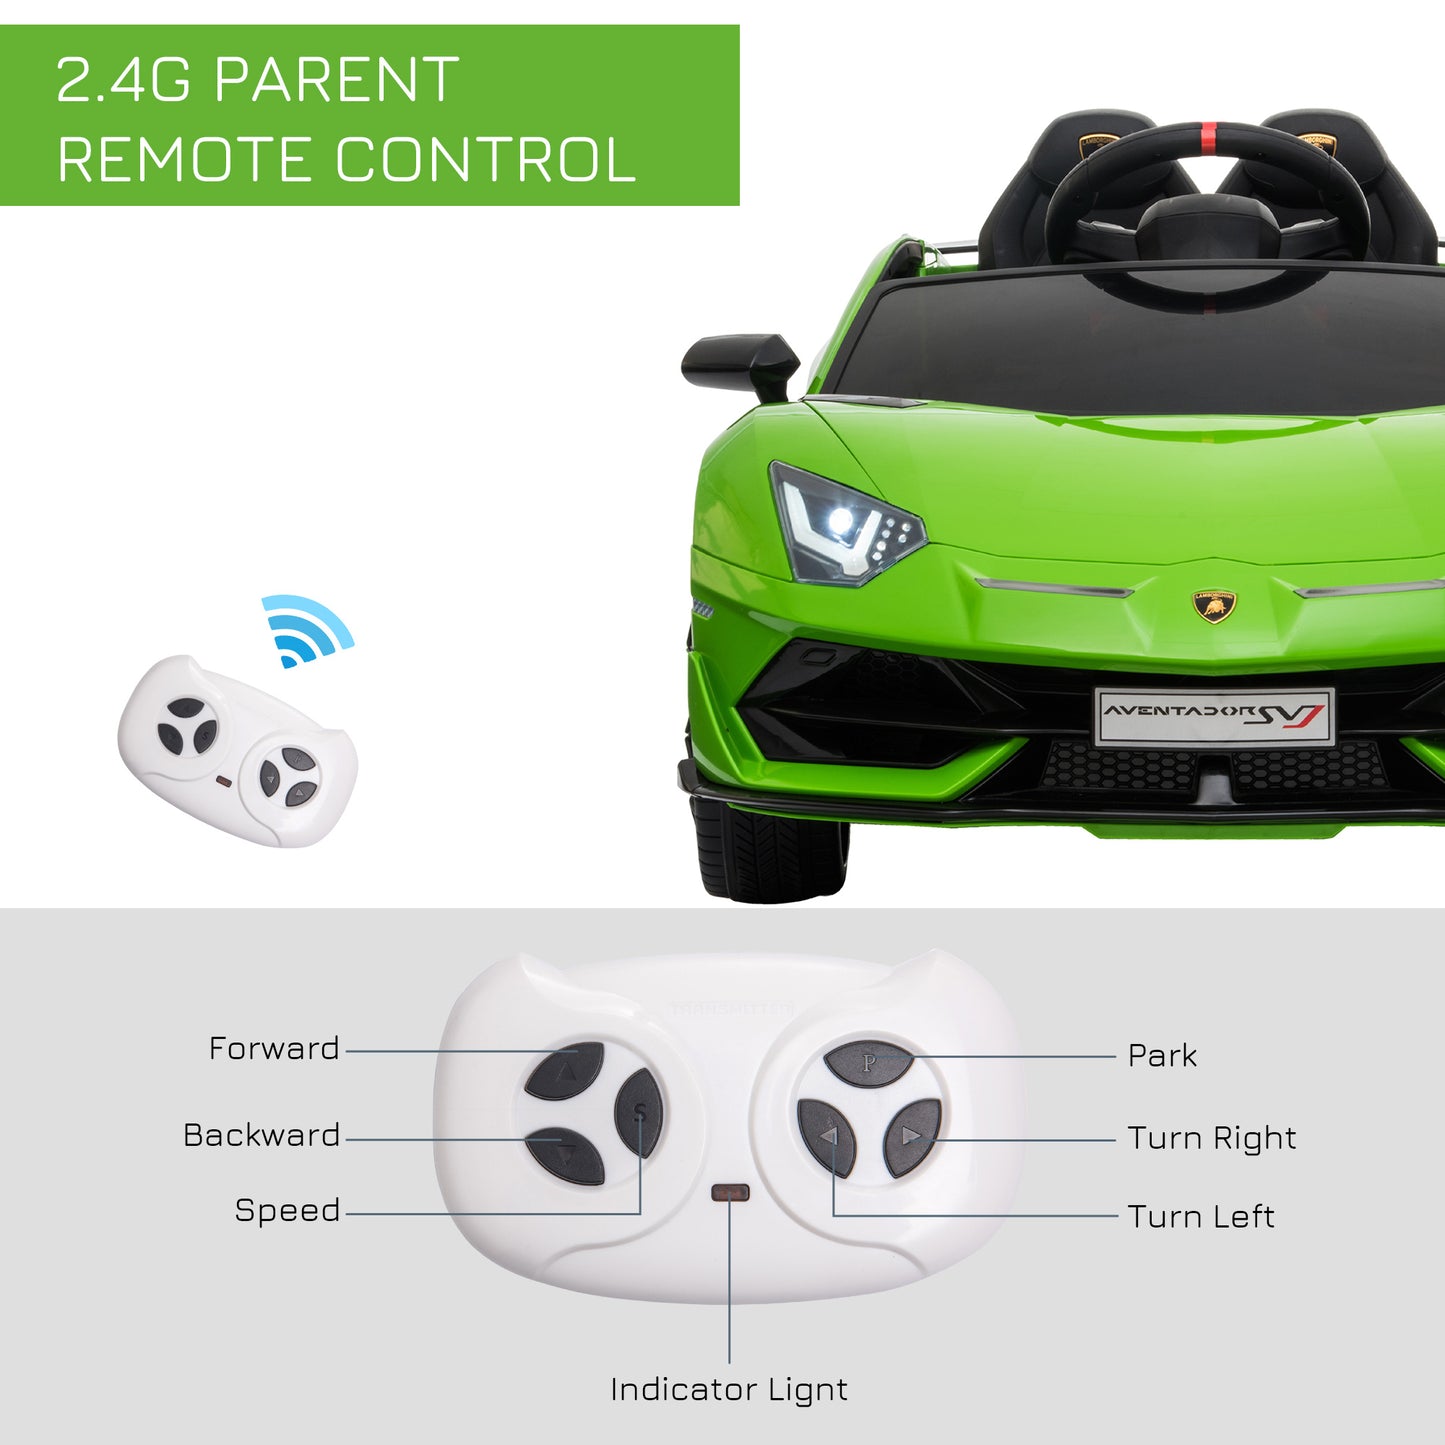 HOMCOM Lamborghini SVJ 12V Kids Electric Ride On Car Sport Racing Toy RC for 3-8 Yrs